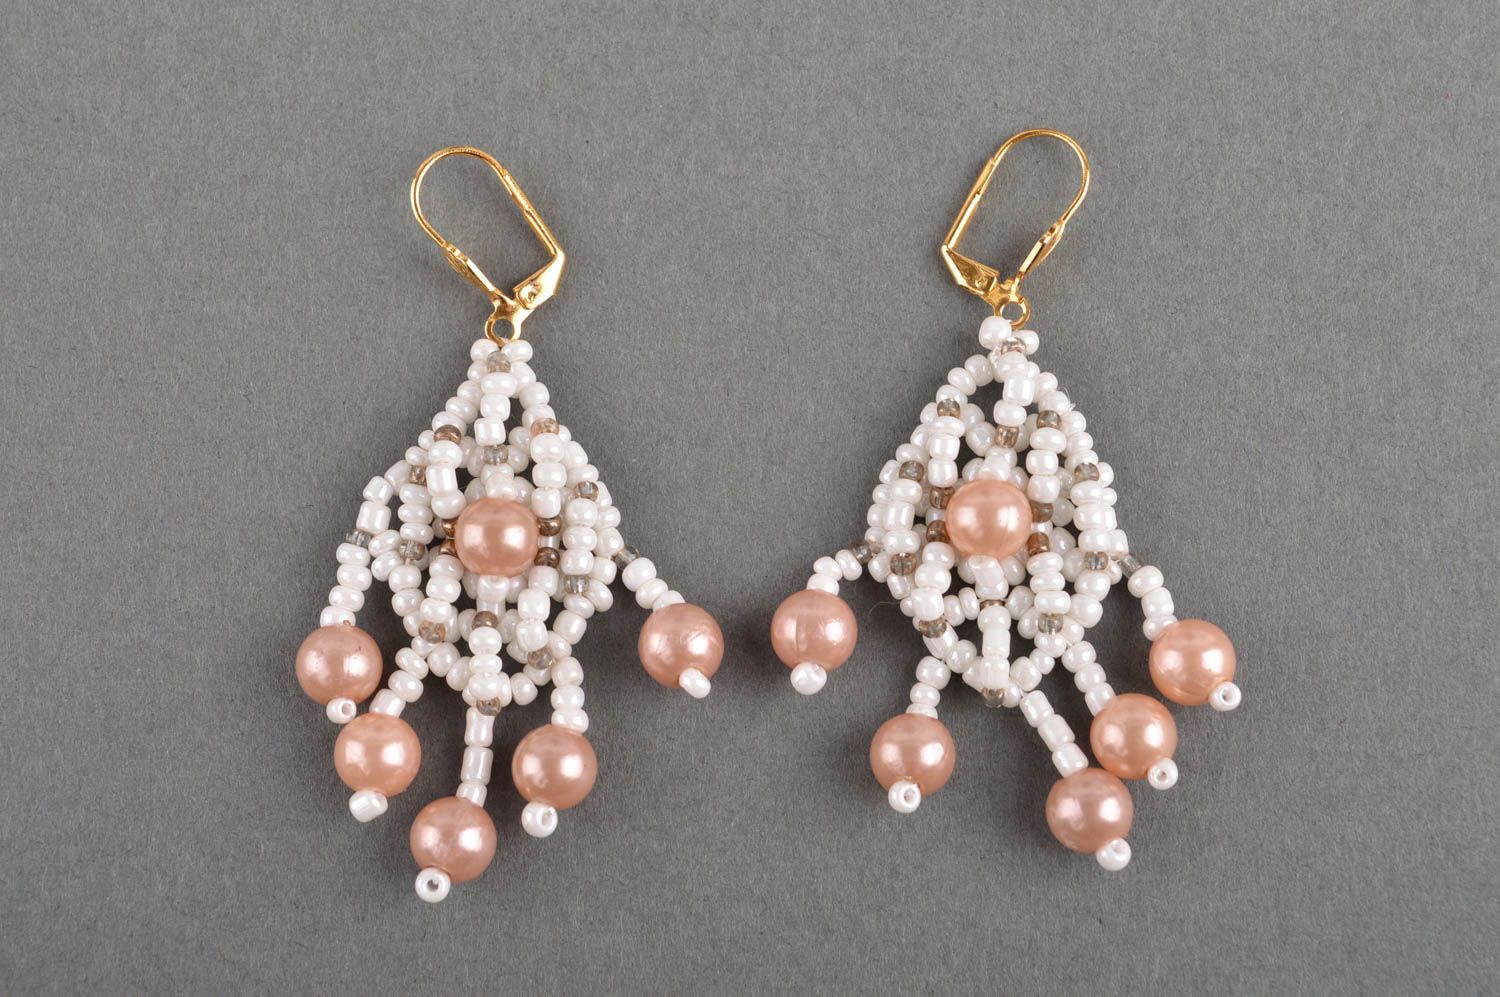 Handmade accessories beautiful jewelry gift ideas unusual gift for women photo 5